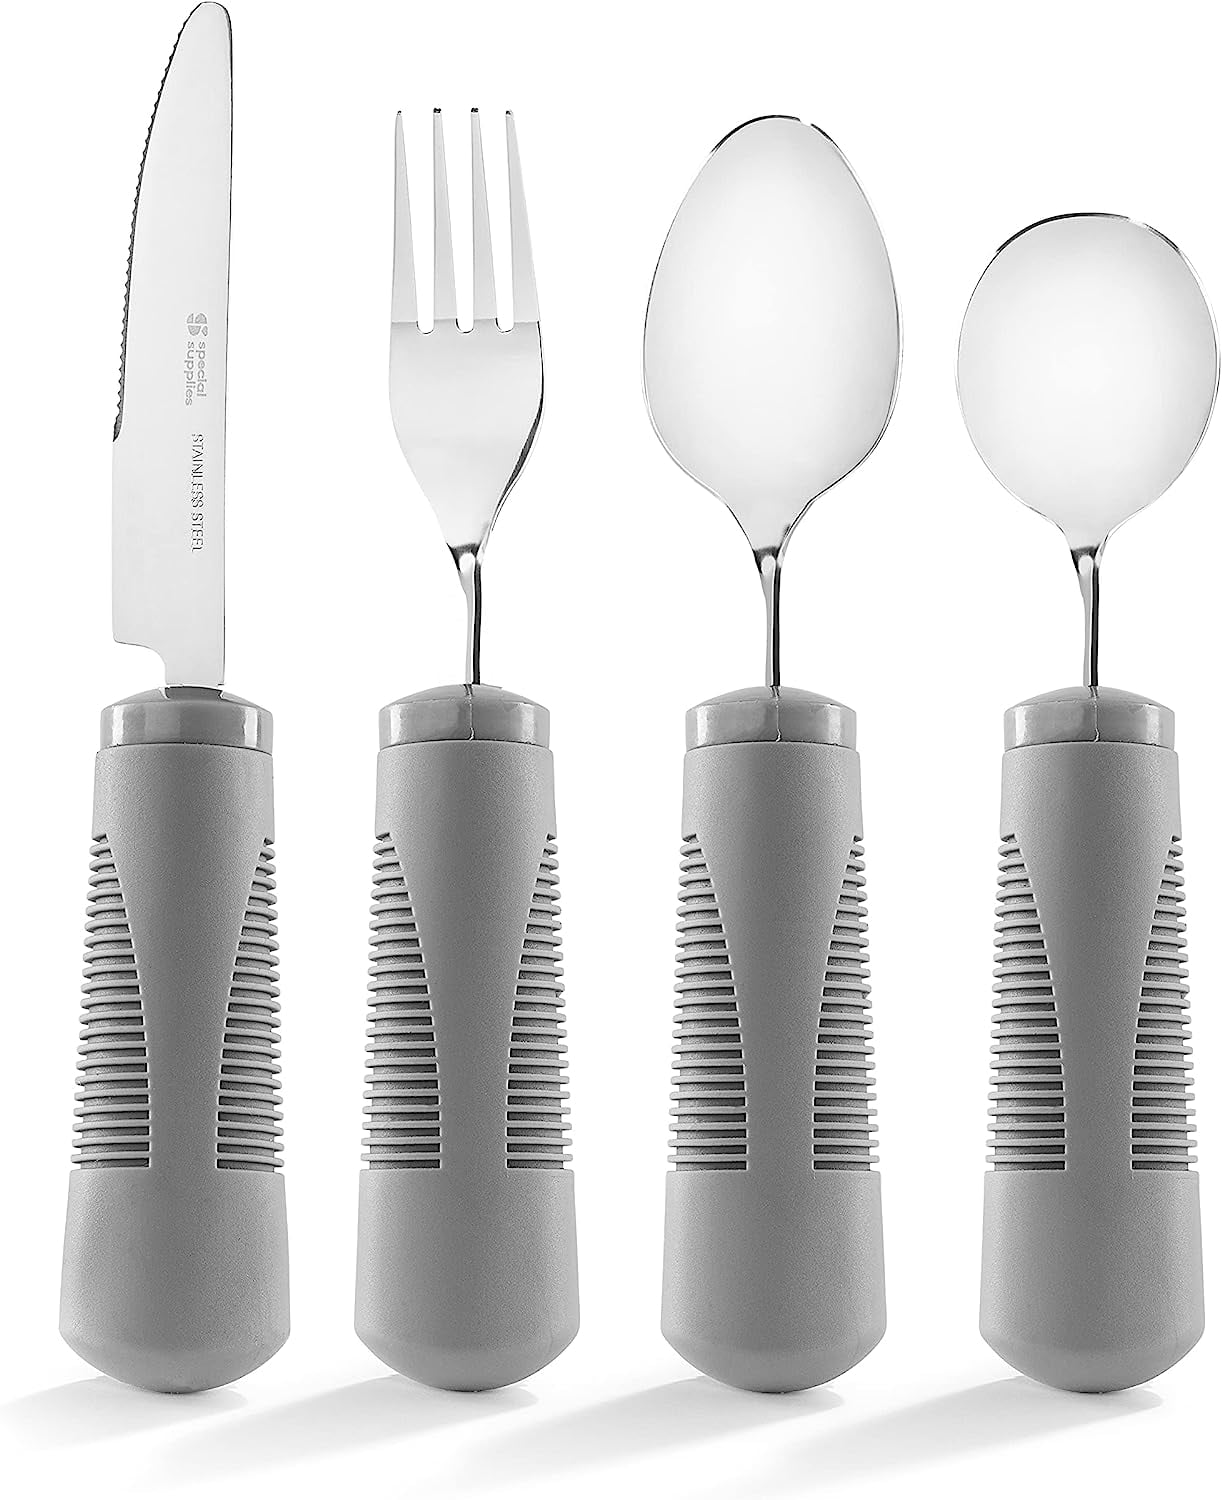 Set of 5 Colored Adaptive Utensils - Stainless Steel Knife, Rocker Knife,  Fork, Soup Spoon, Dinner Spoon